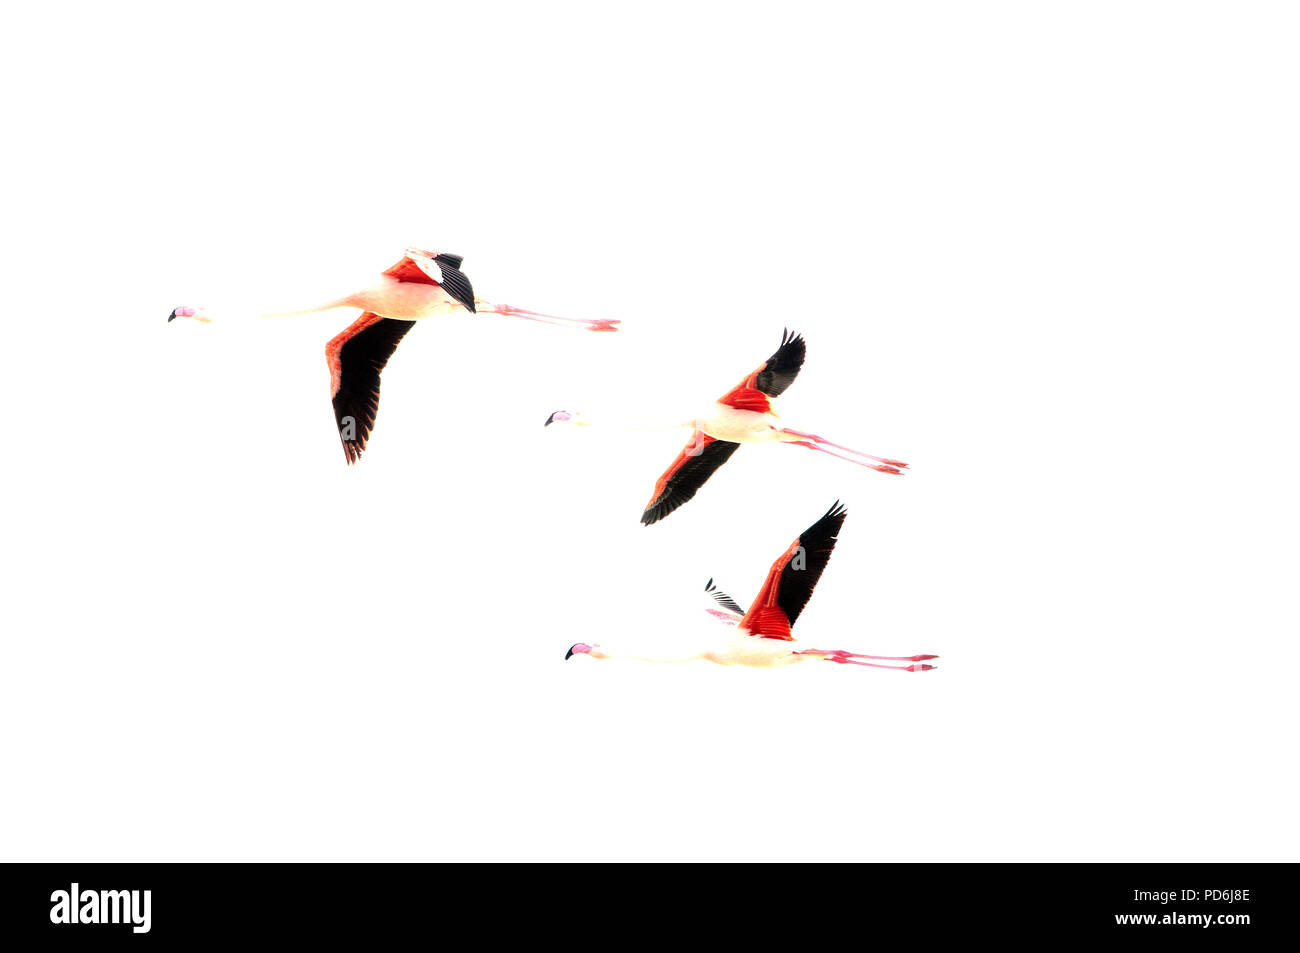 Große Flamingo - Flug - Camargue - Frankreich - Phoenicopterus roseus - Flamant Rose - Vol. Stockfoto